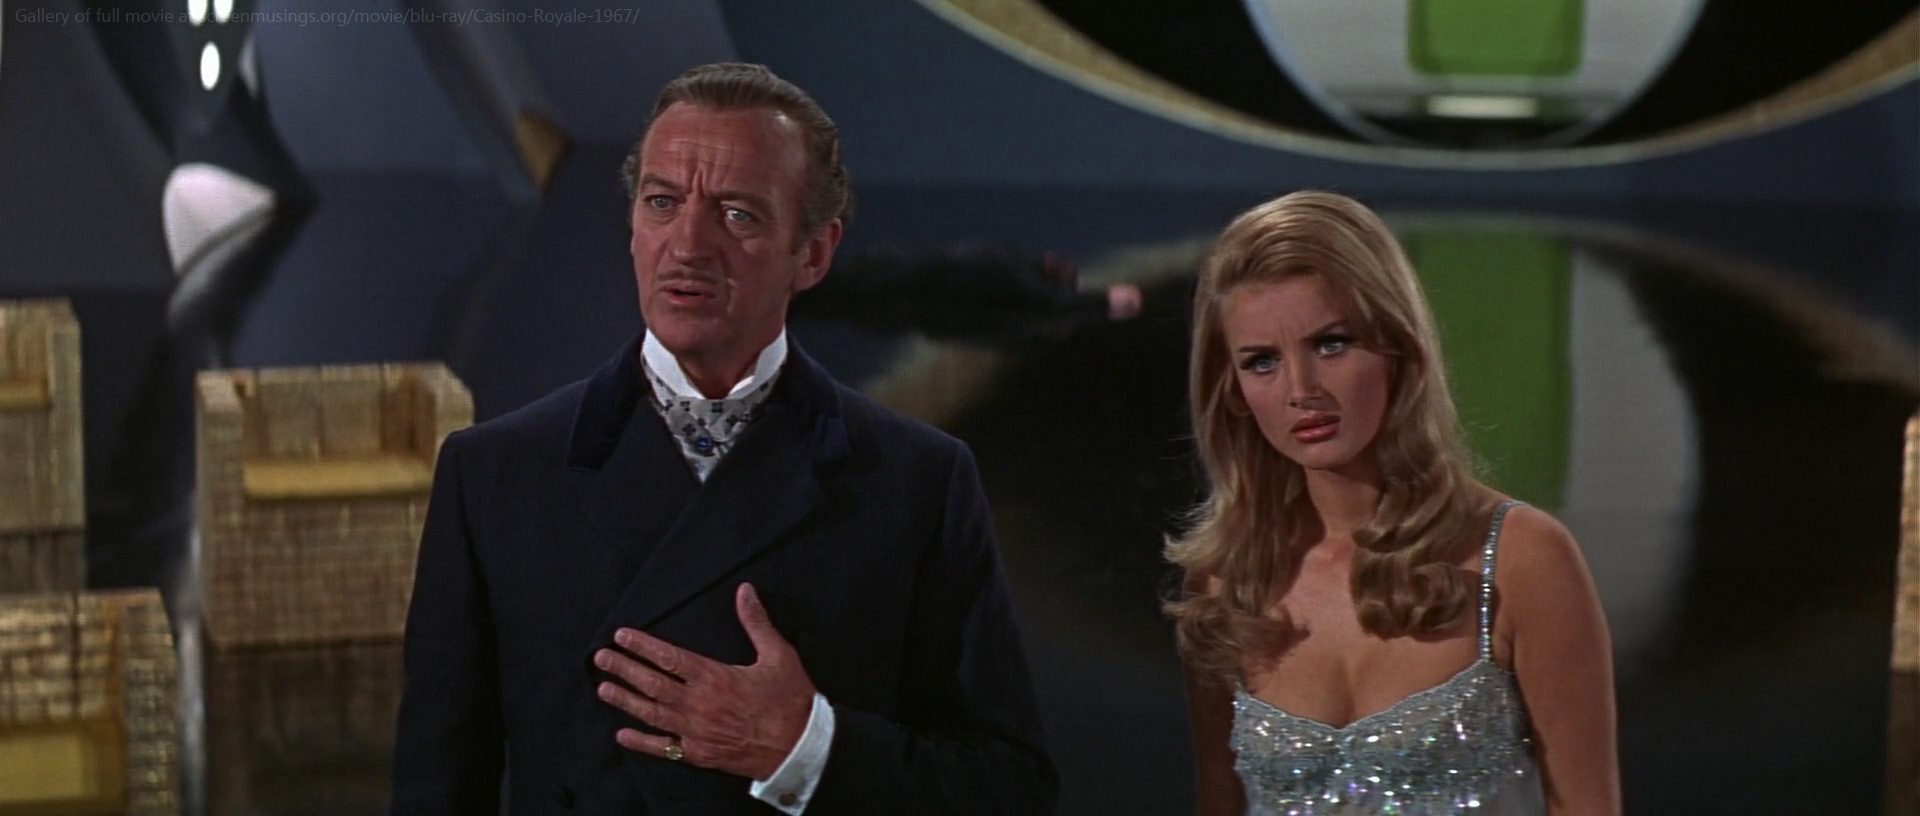 David Niven as Sir James Bond in Casino Royale (1967)